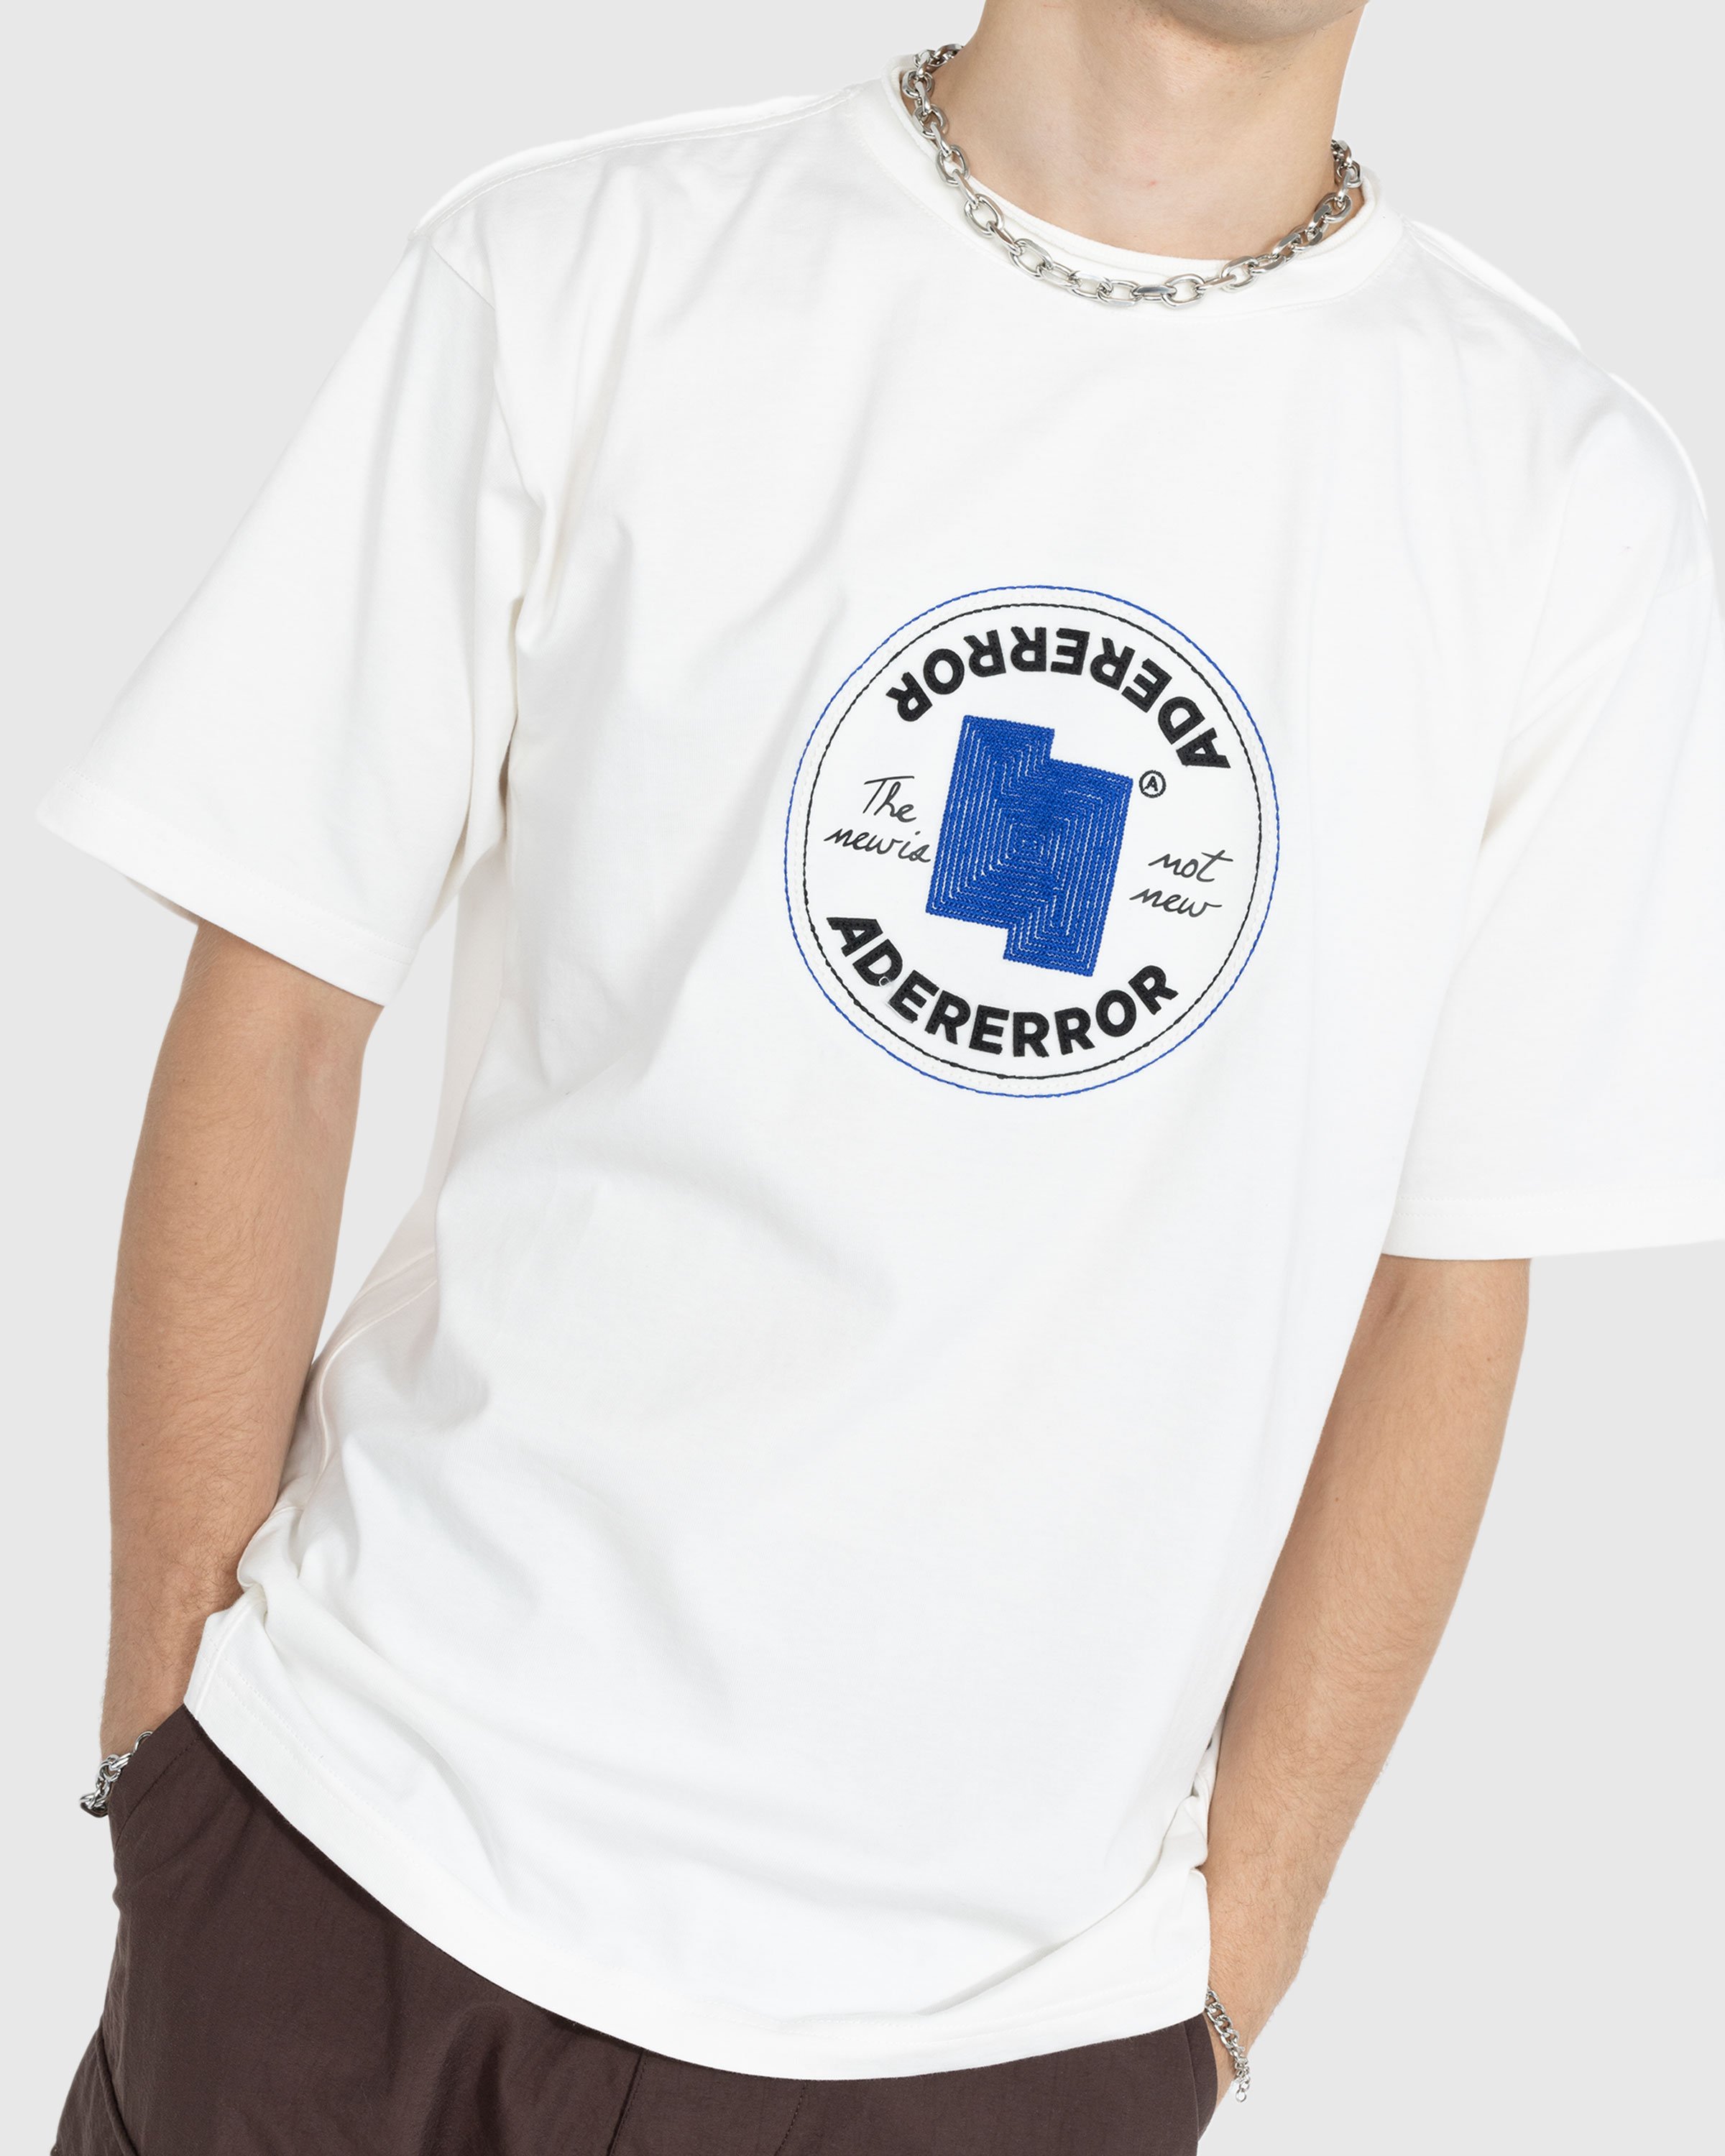 Converse x Ader Error - Shapes T-Shirt Cloud Dancer - Clothing - White - Image 4